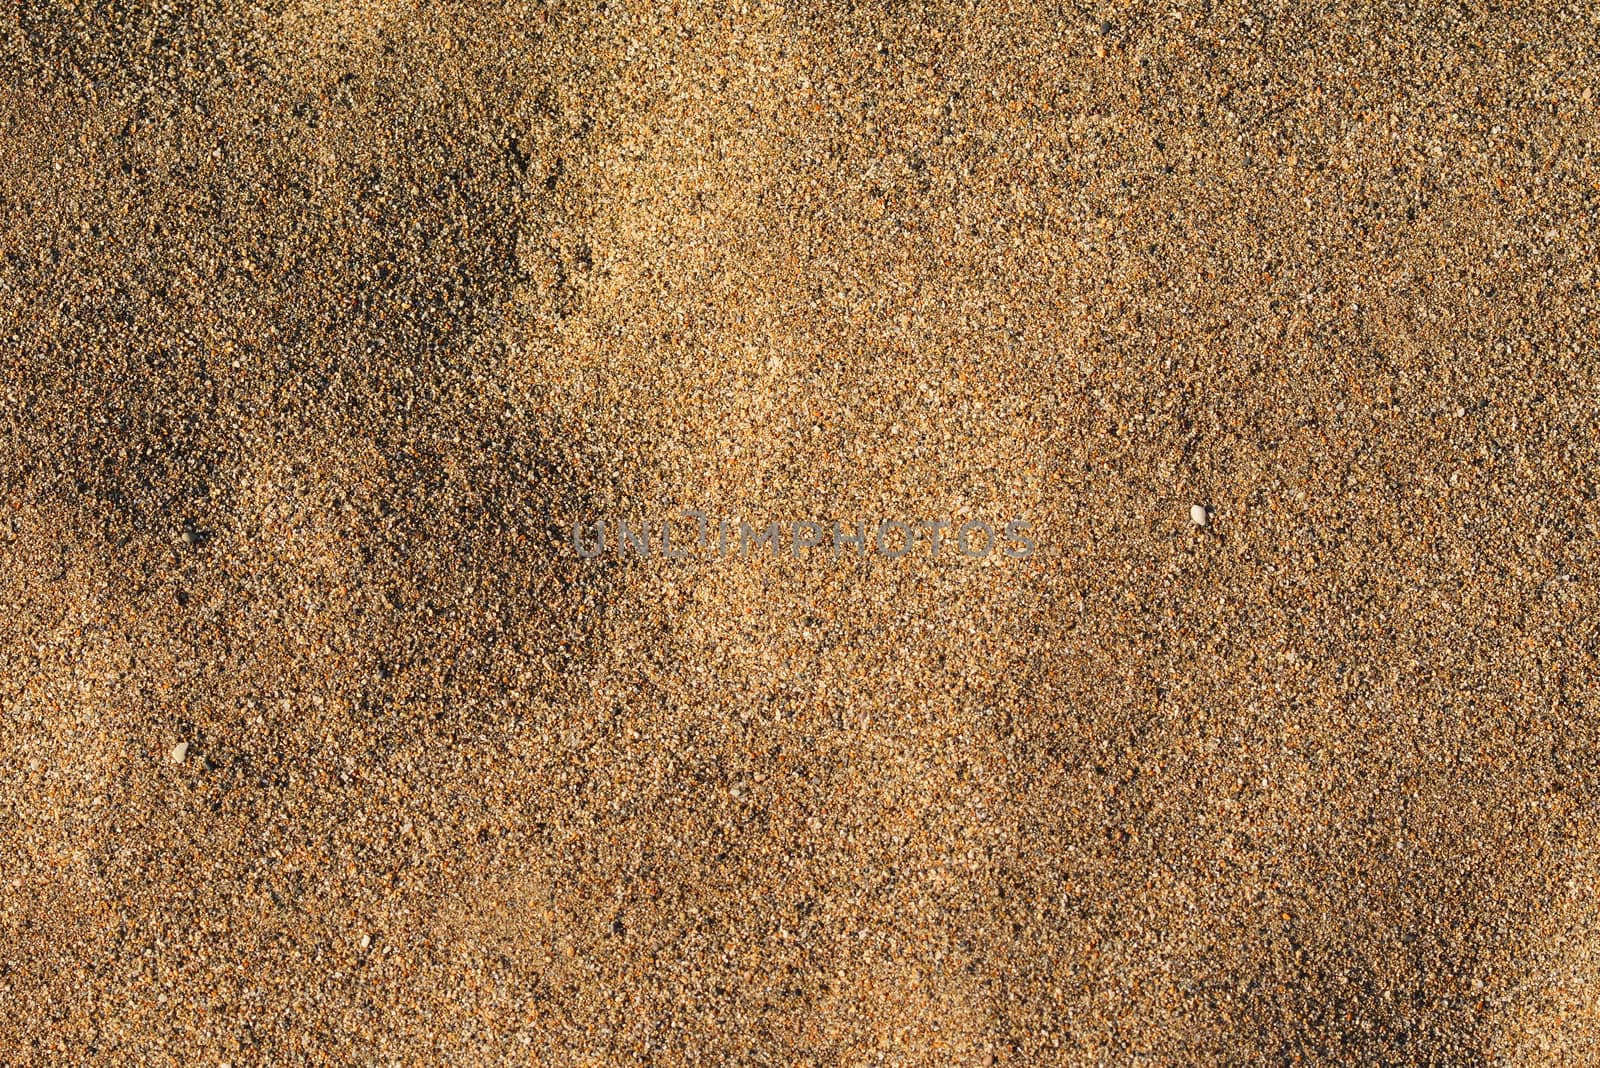 Yellow sand surface by cherezoff